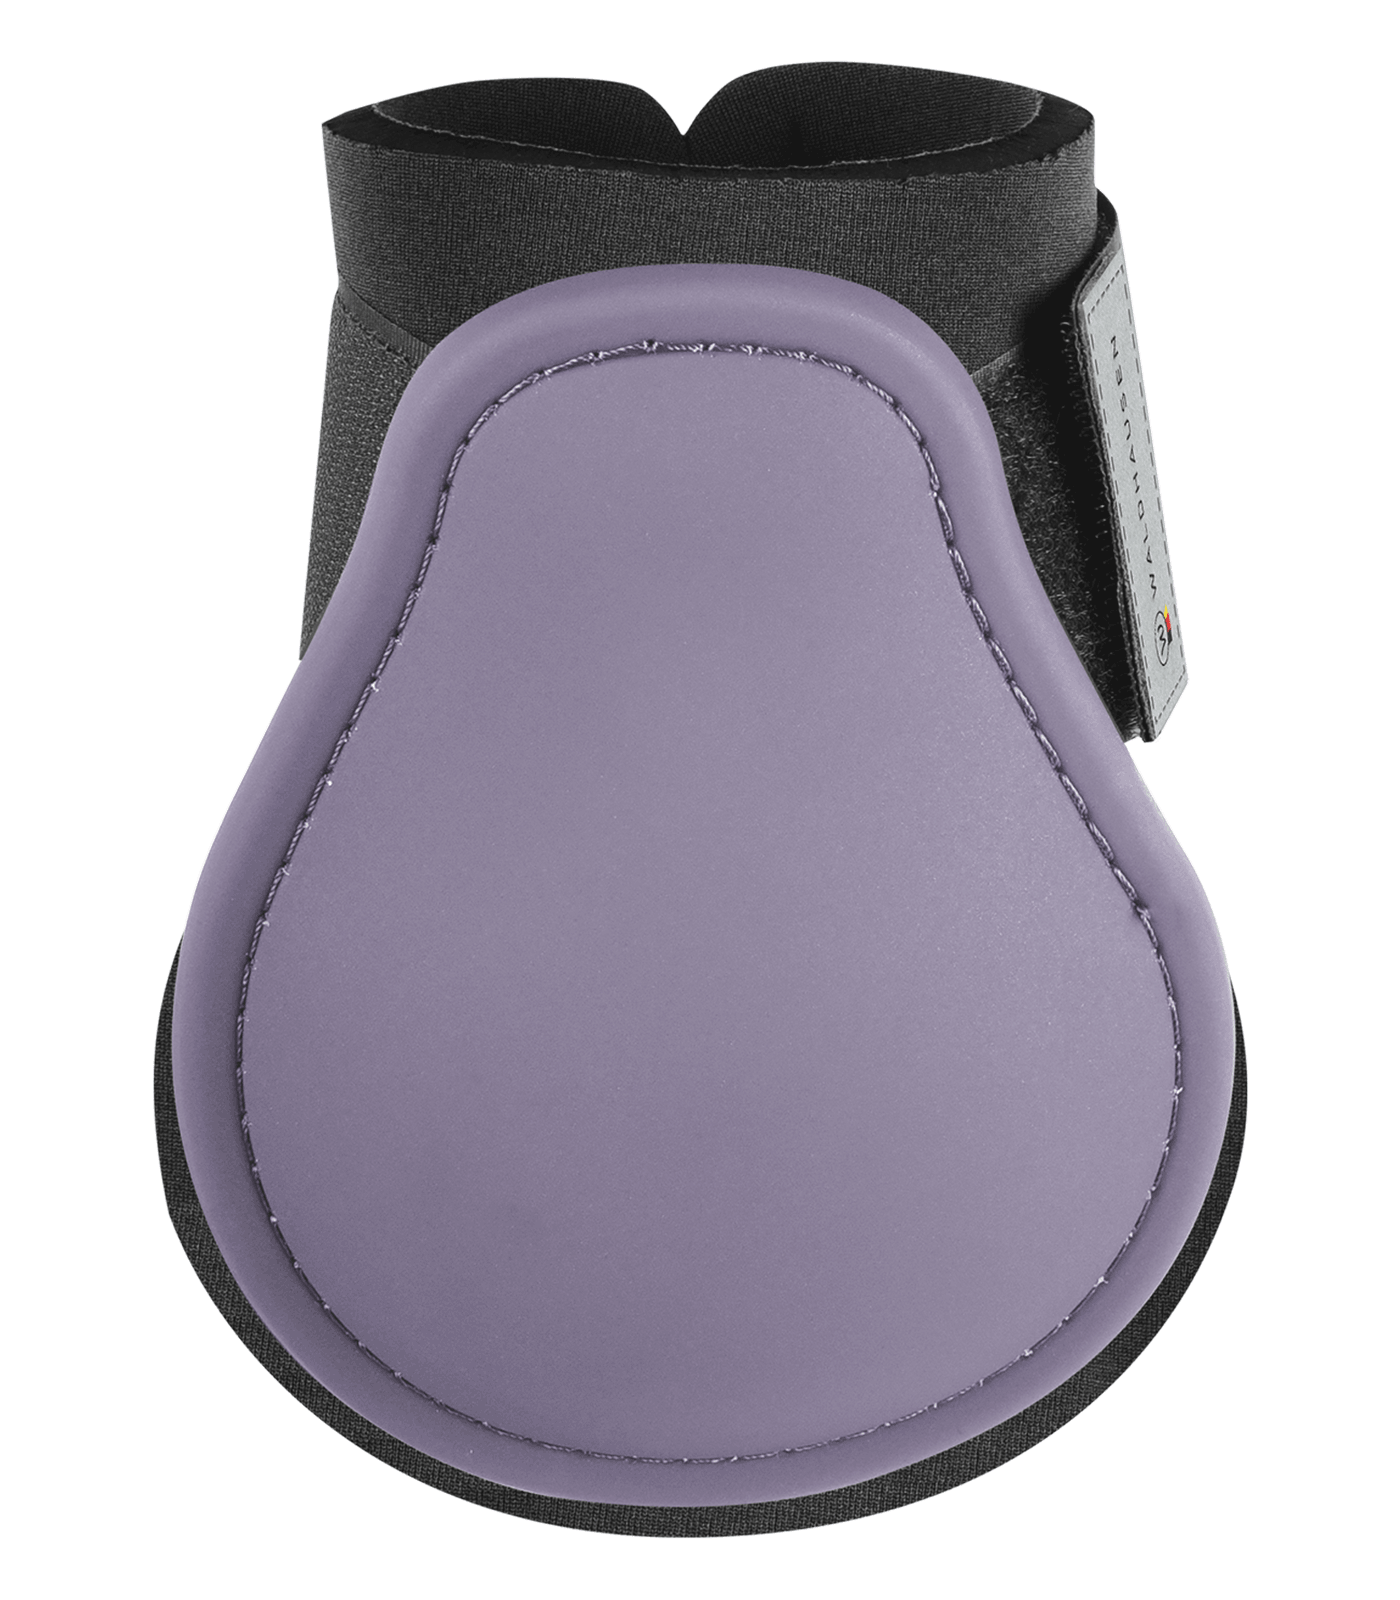 Basic Hind Boots, pair lavender/black